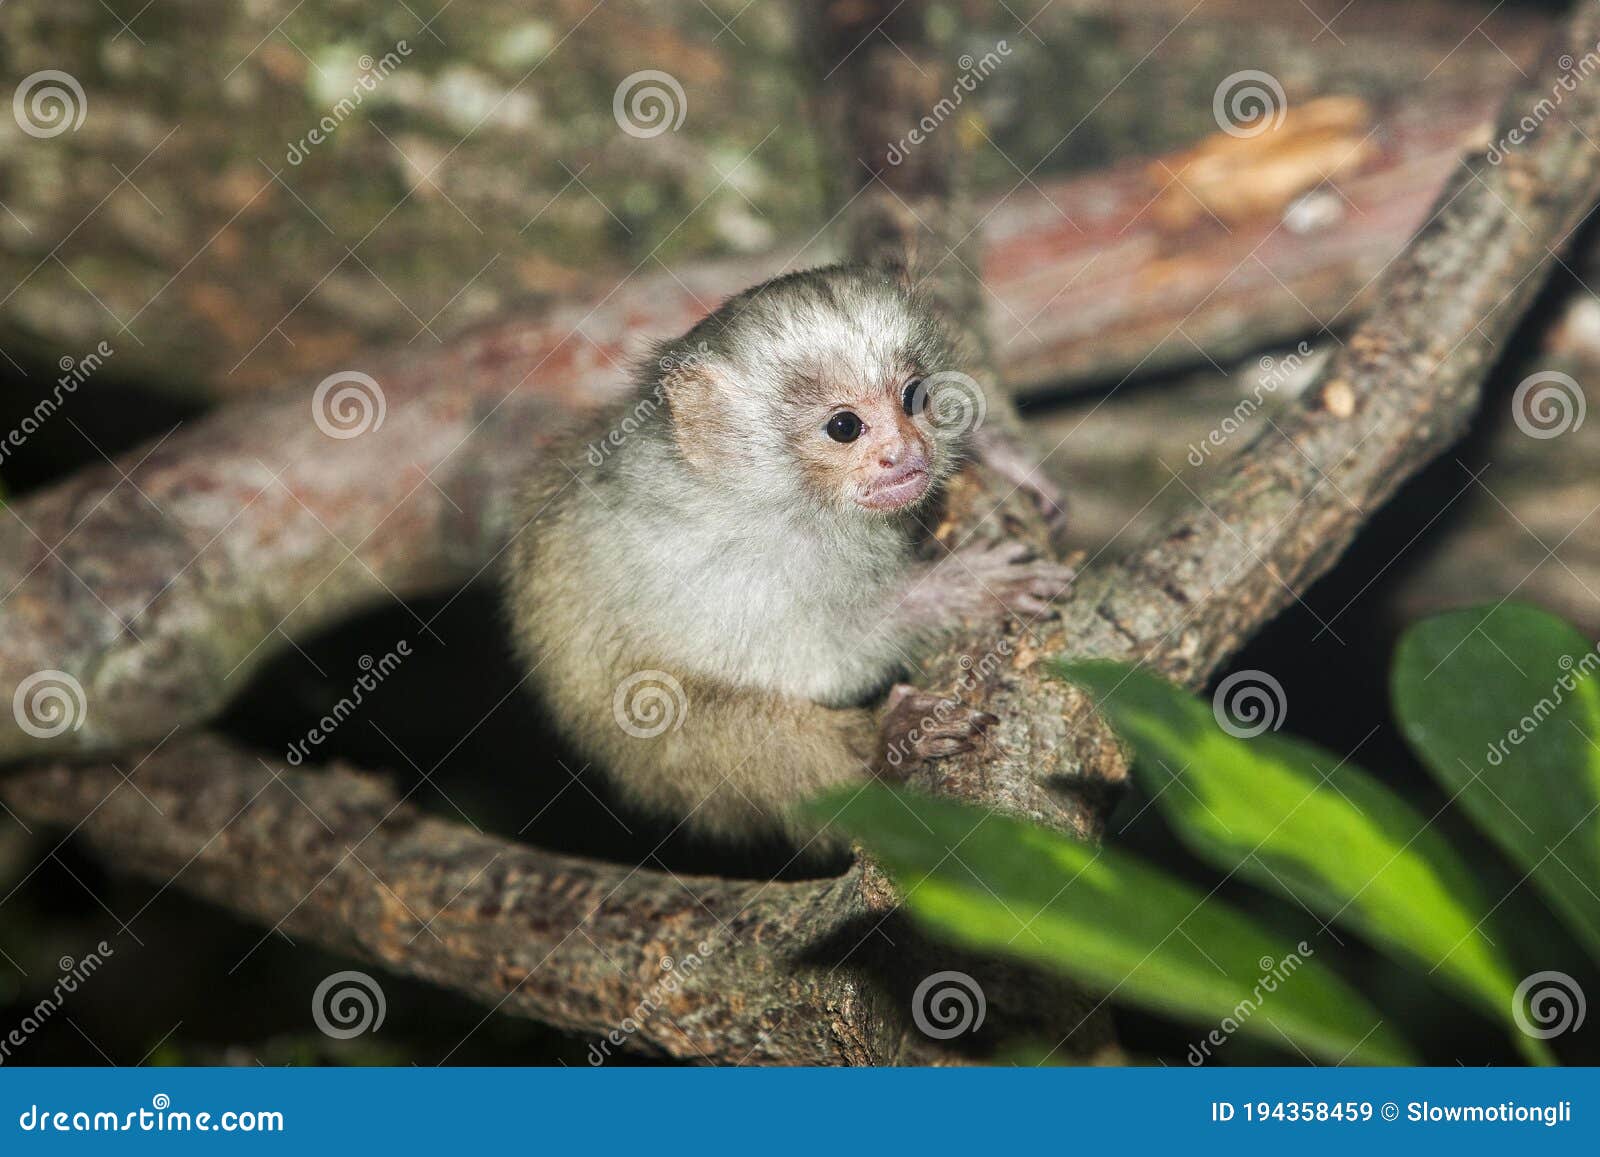 baby silvery marmoset mico argentatus on a branch